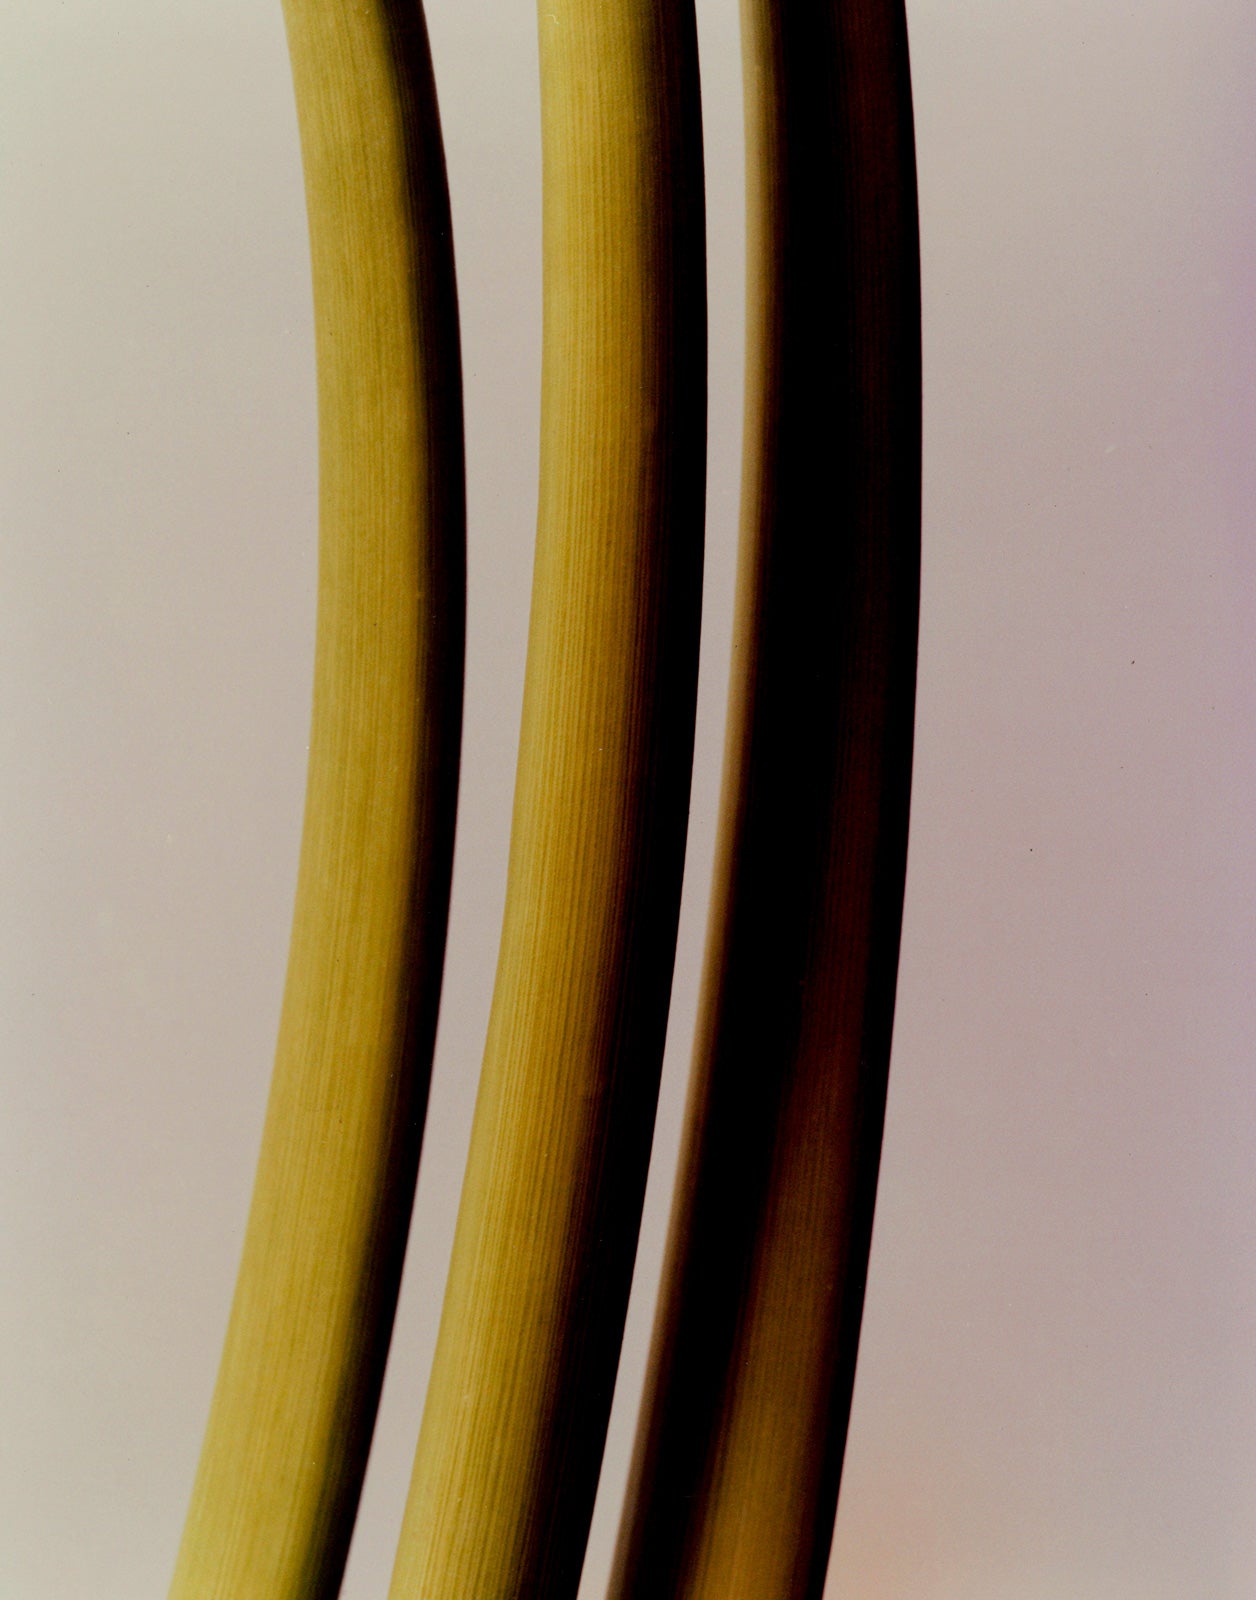 Abstract photograph of three rhubarb stalks by Cho Gi Seok